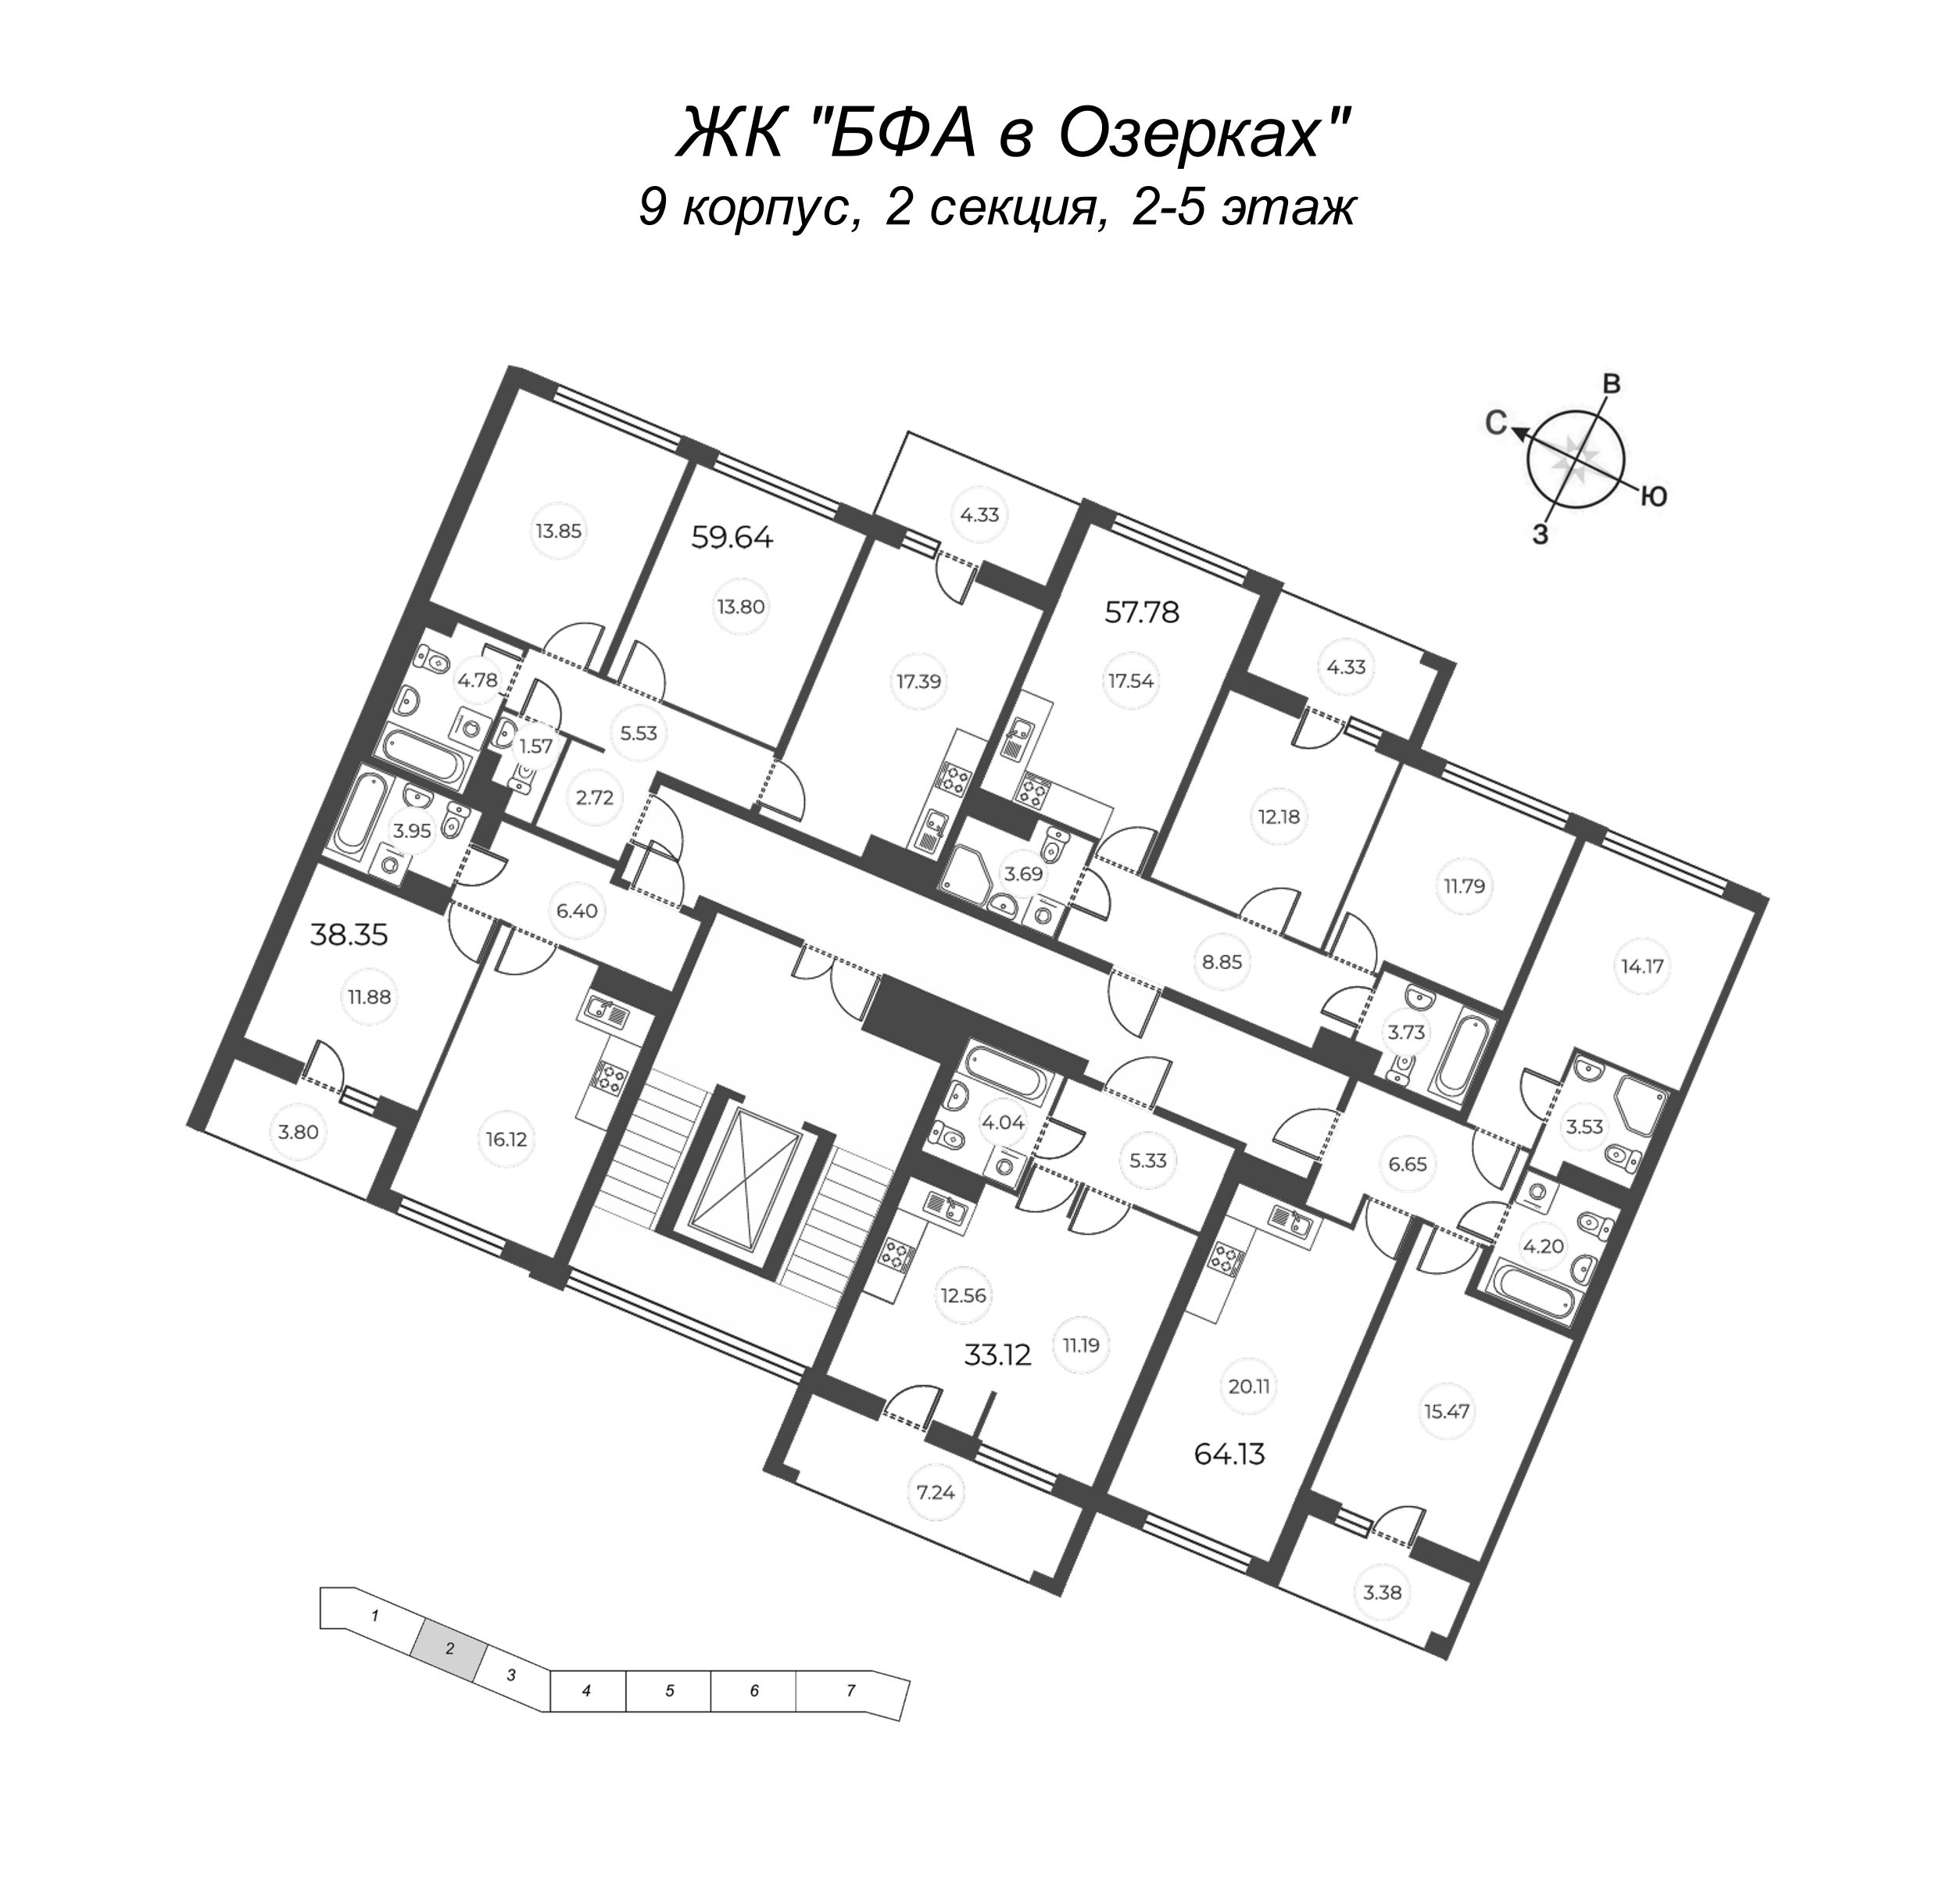 3-комнатная (Евро) квартира, 59.95 м² - планировка этажа